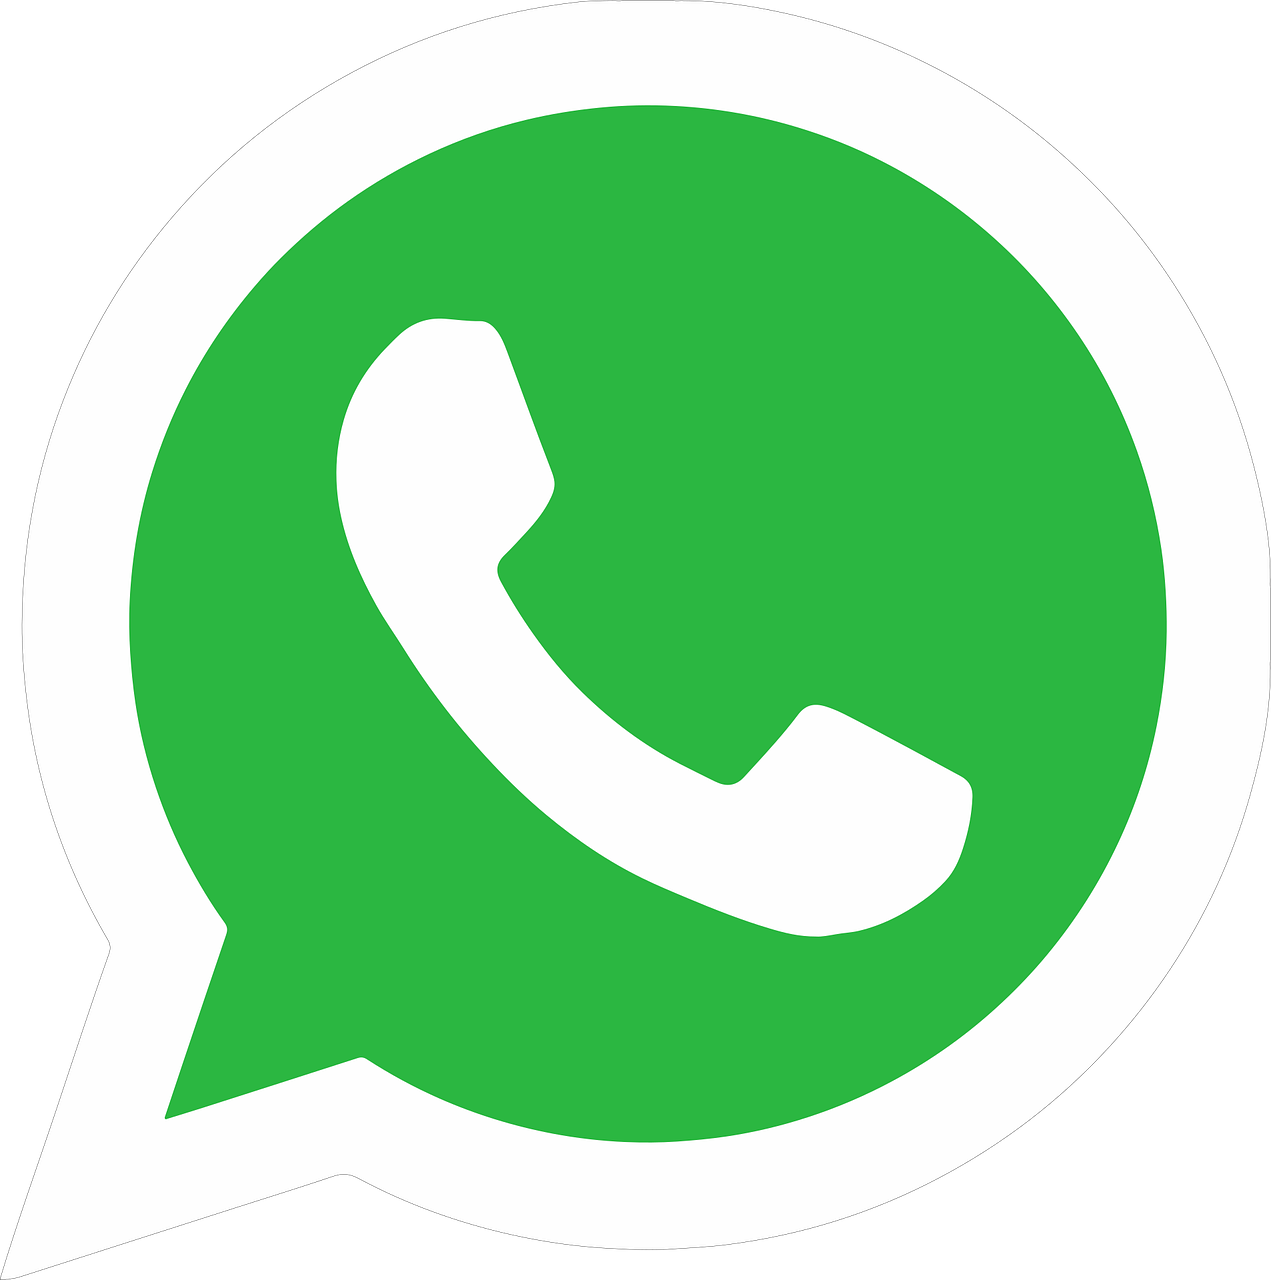 whatsapp, whatsapp logo, whatsapp icon-6273368.jpg